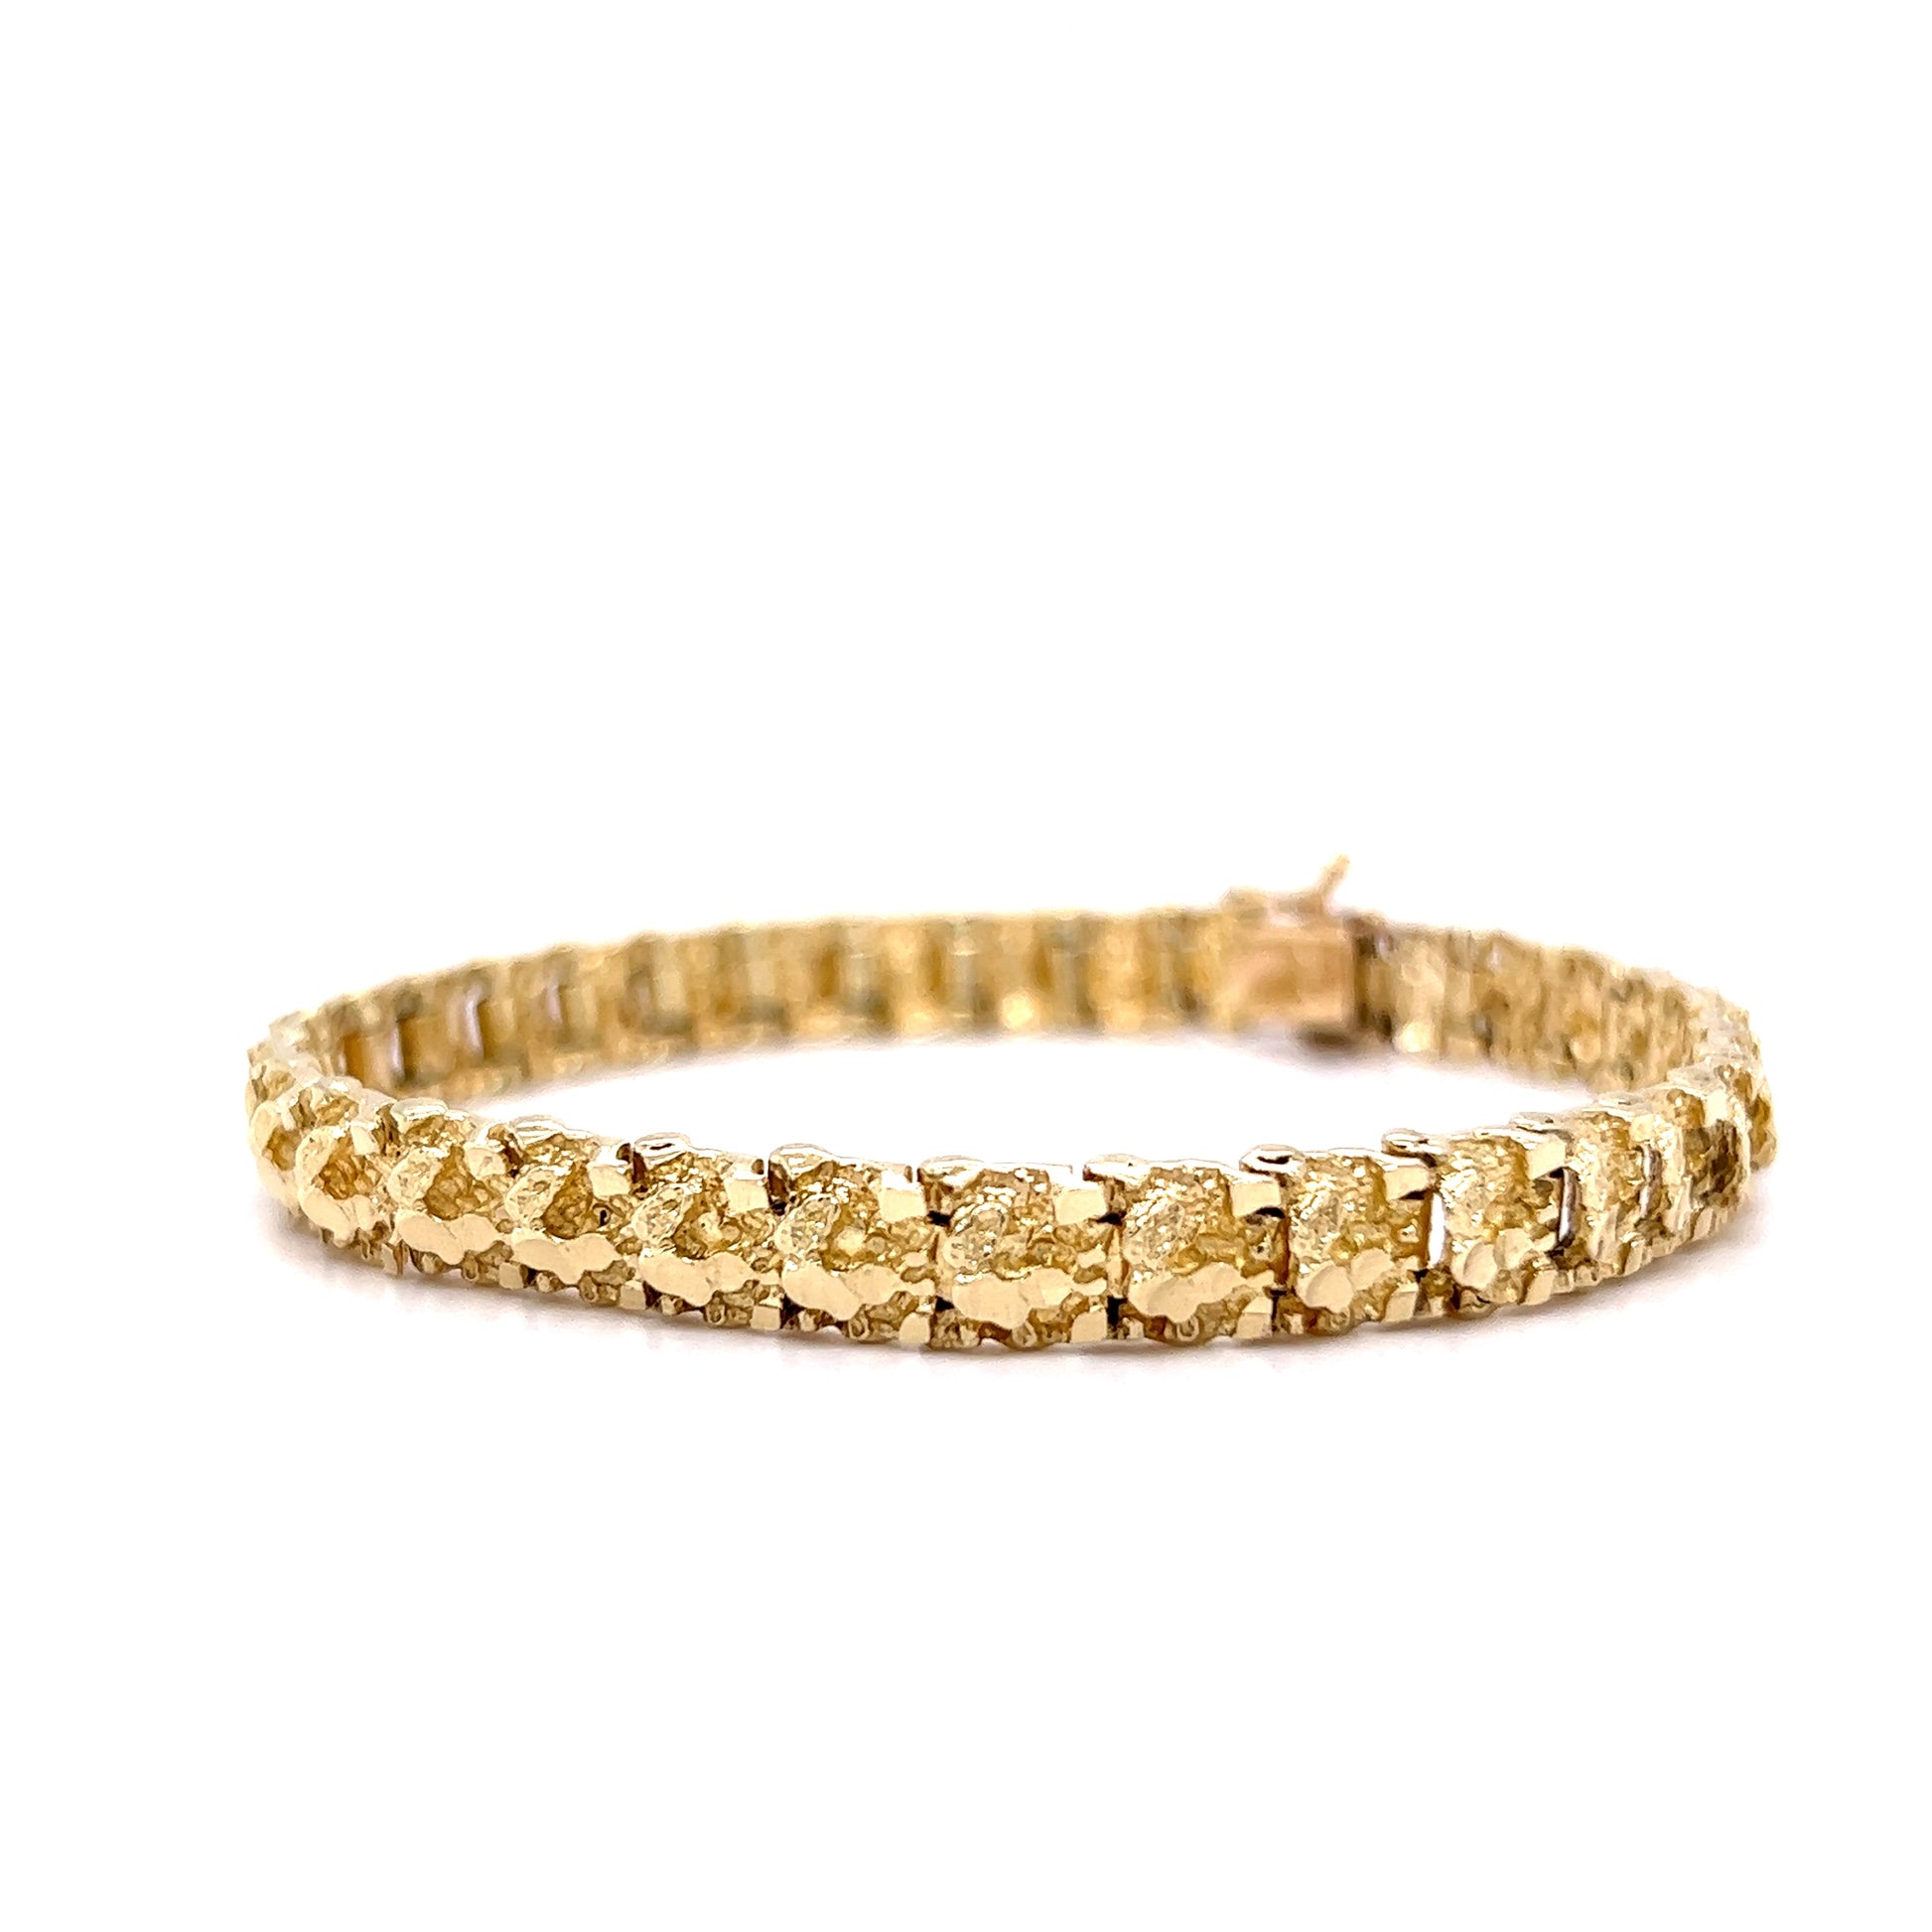 Gold Nugget Bracelet in 14k & 24k Yellow GoldComposition: 14 Karat Yellow GoldTotal Gram Weight: 17.6 gInscription: 14k